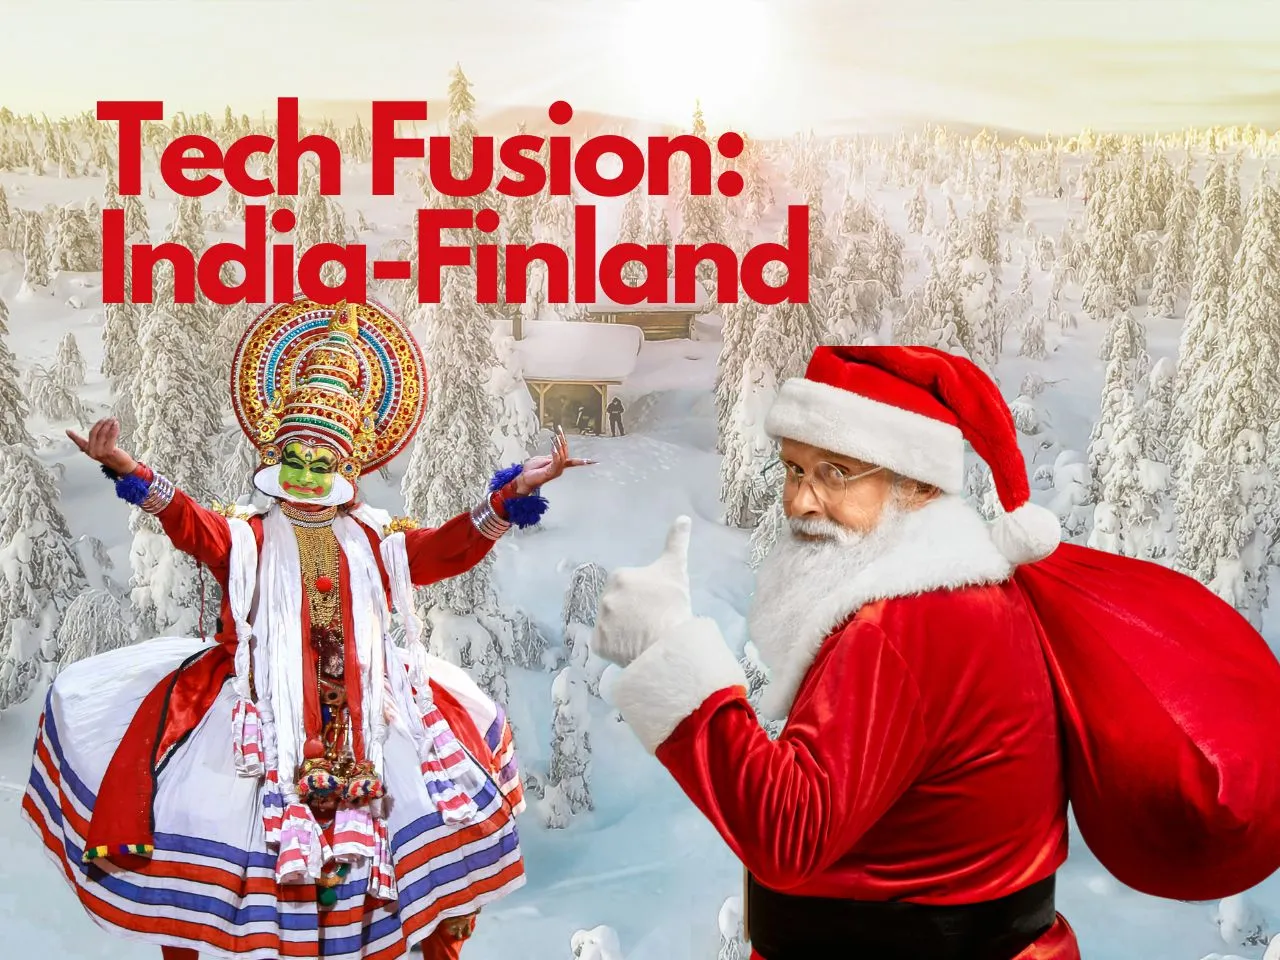 India-Finland